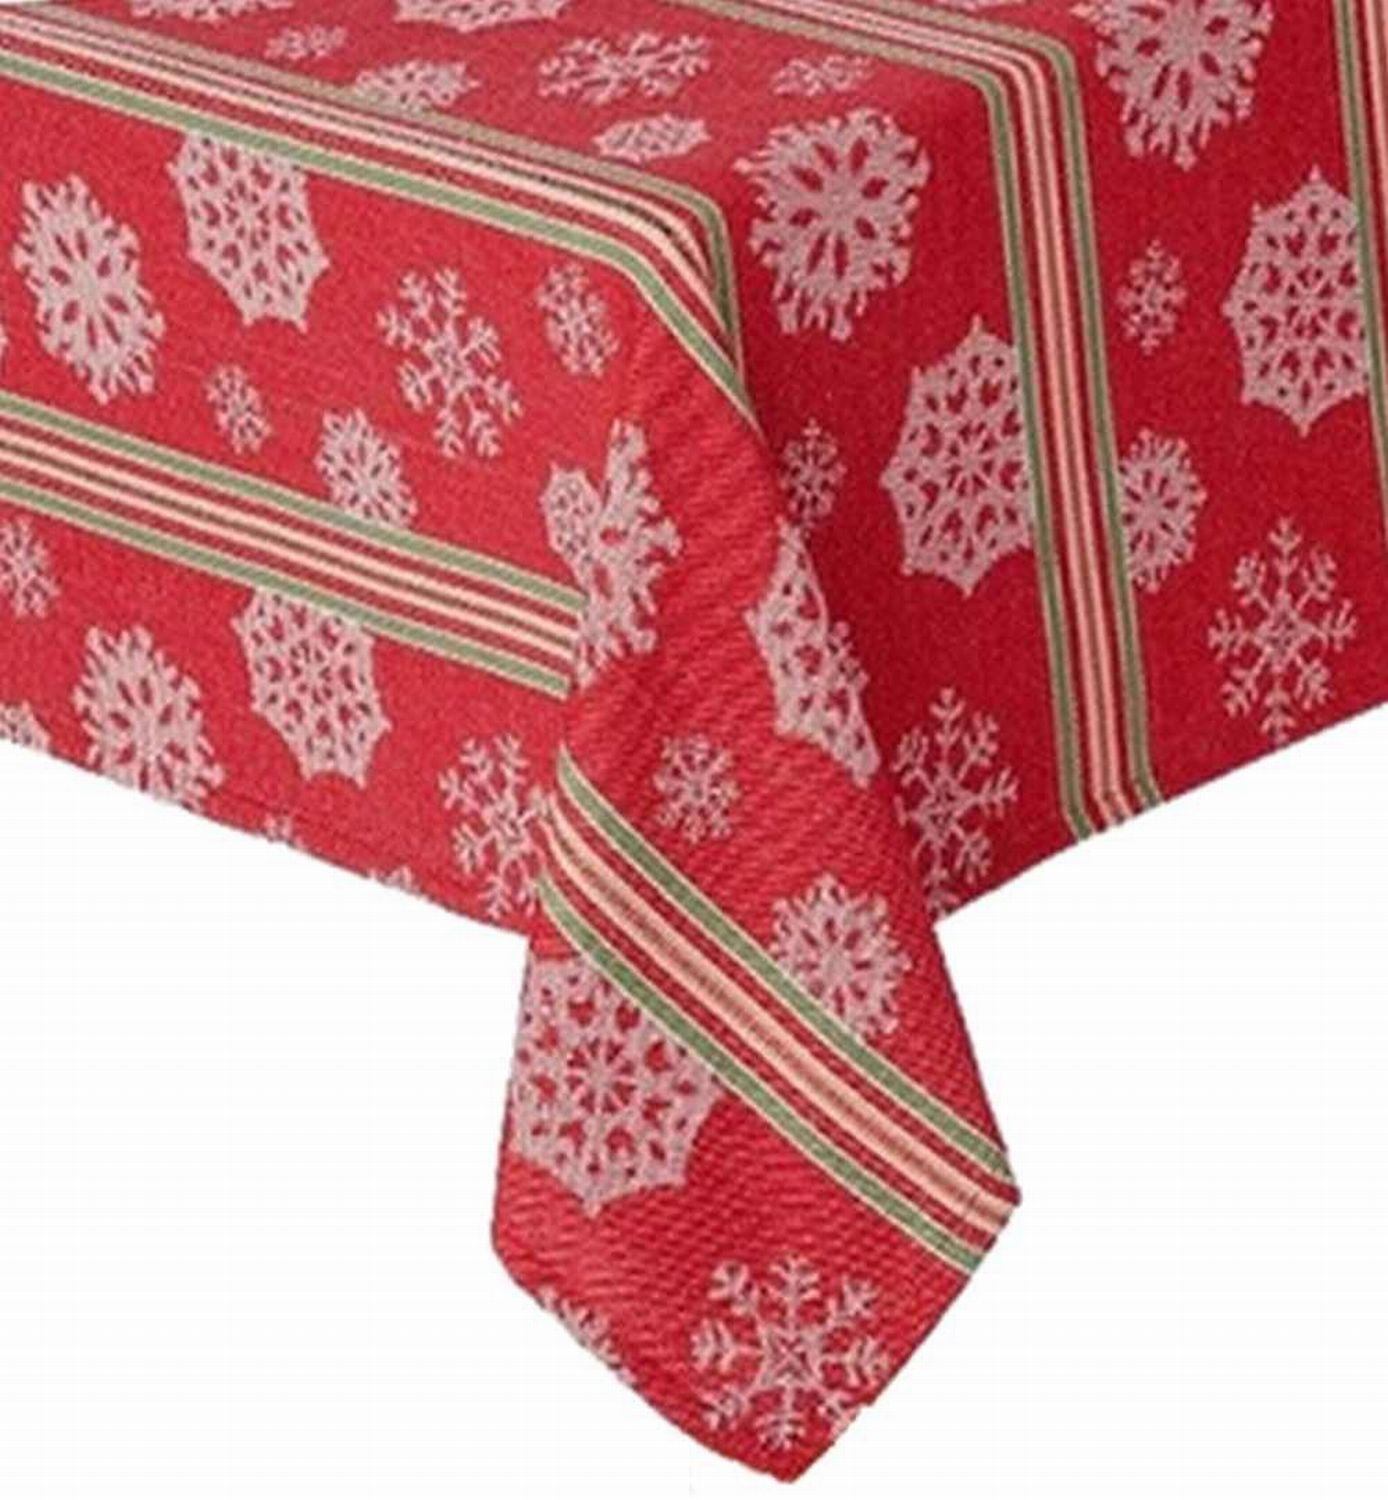 NEW St Nicholas Country Plaid Christmas Tablecloth SIZES 70" Round 60x102 60x120 